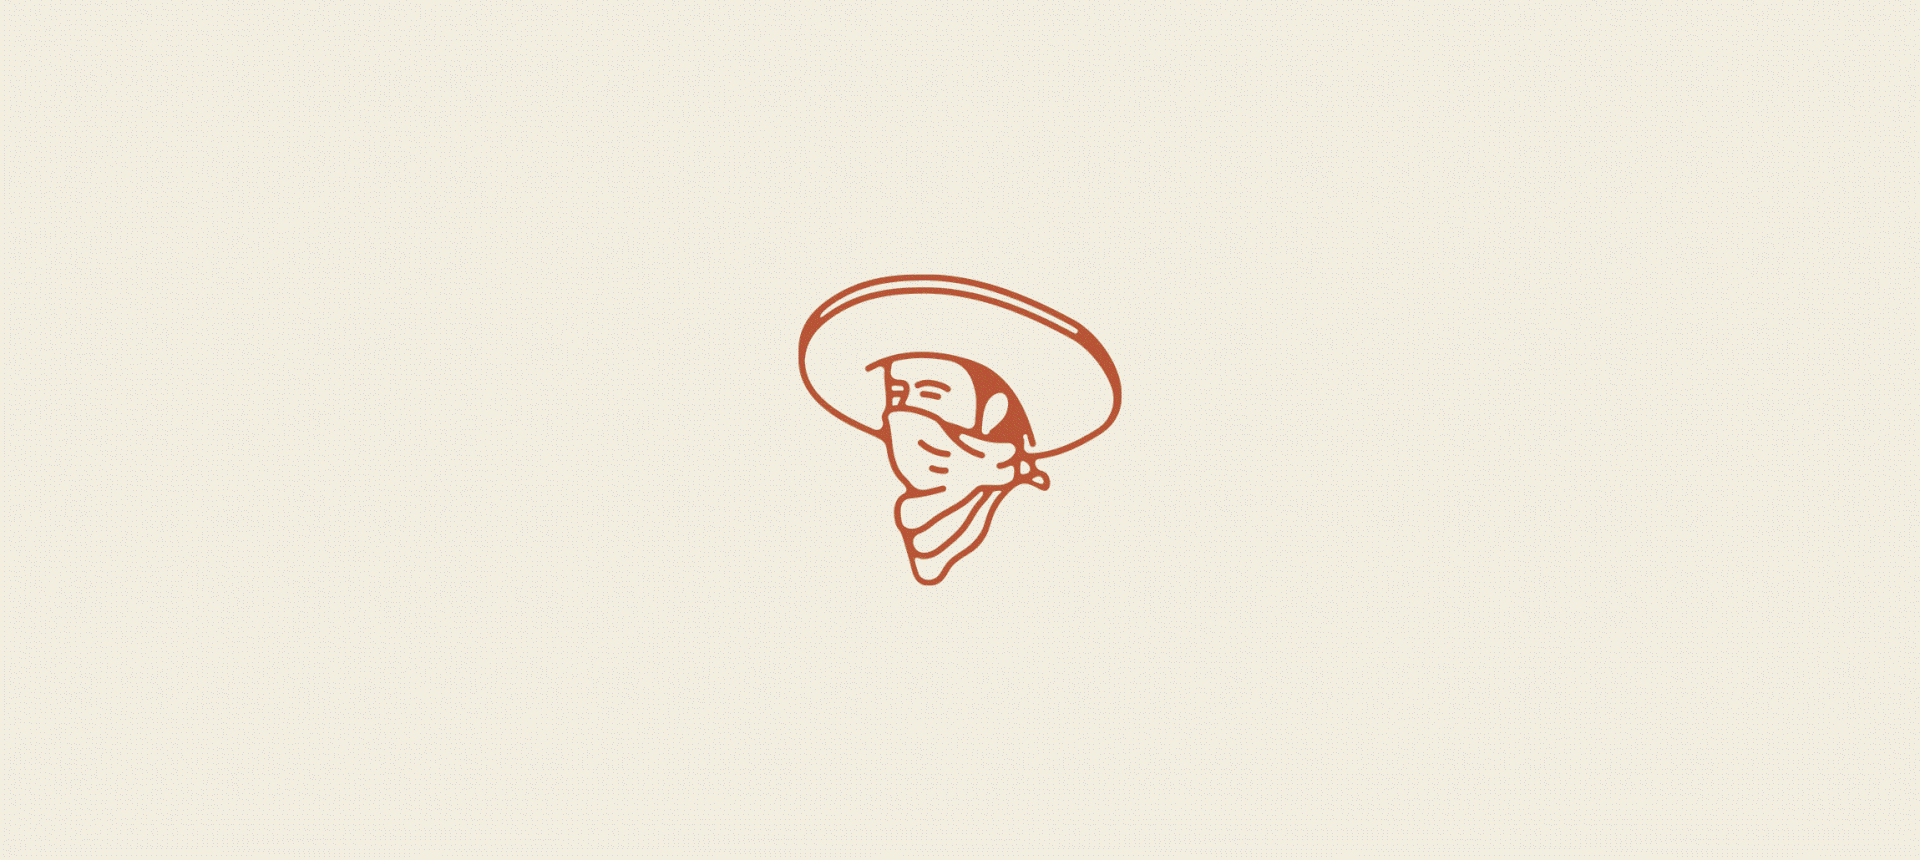 Malverde Visual Identity badge design bandit branding desert illustration logo pomade t-shirt design typography vintage western